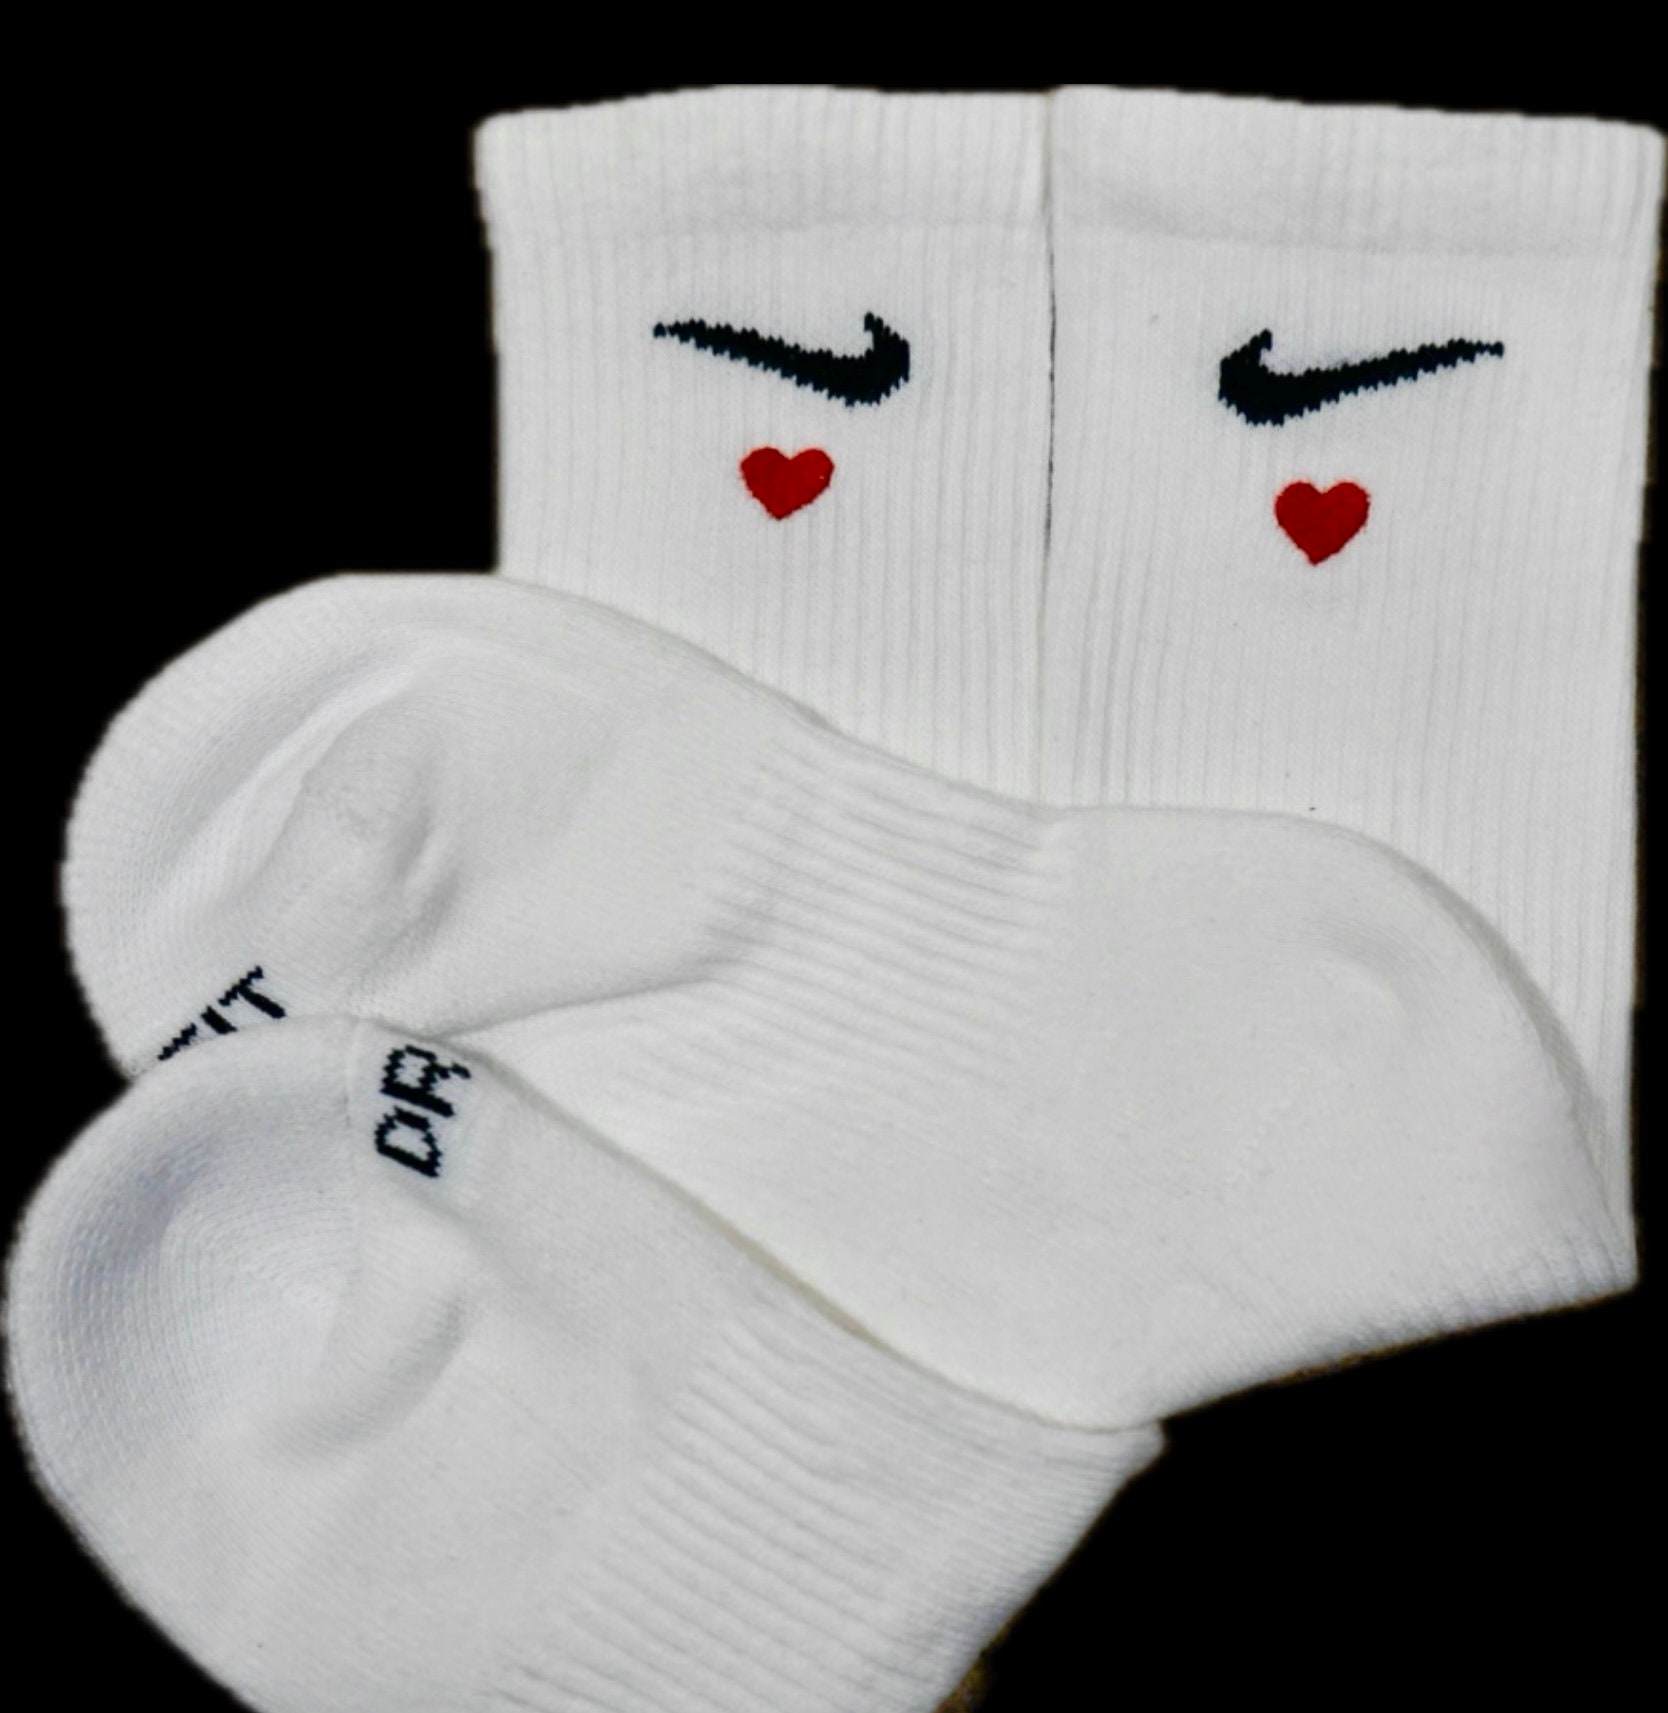 Nike Elite NBA Crew Socks 'Black/White' – Bouncewear